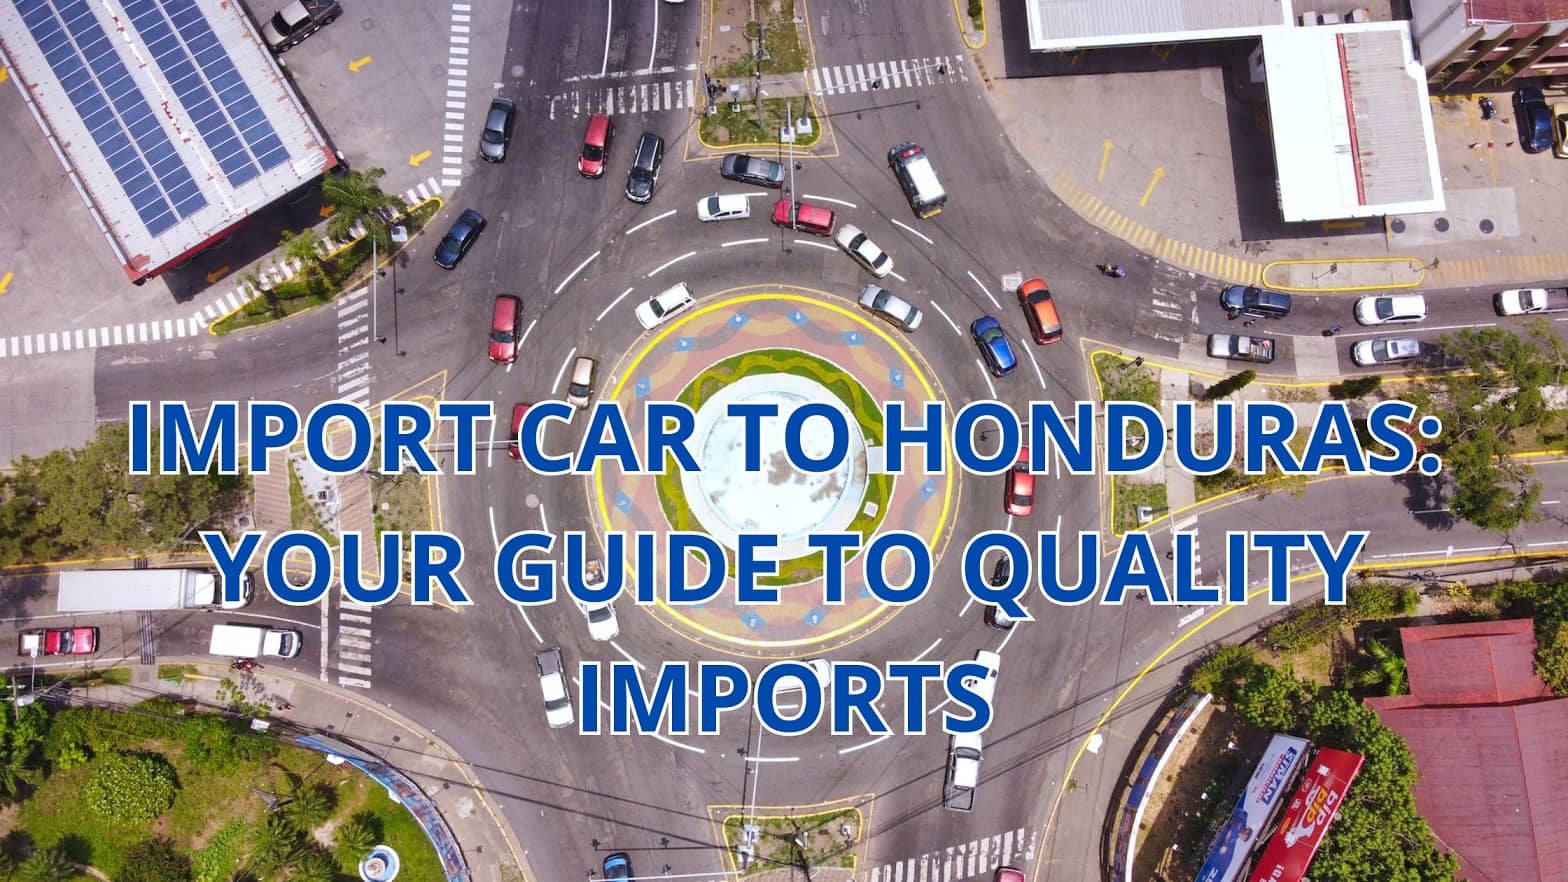 Importing cars to Honduras